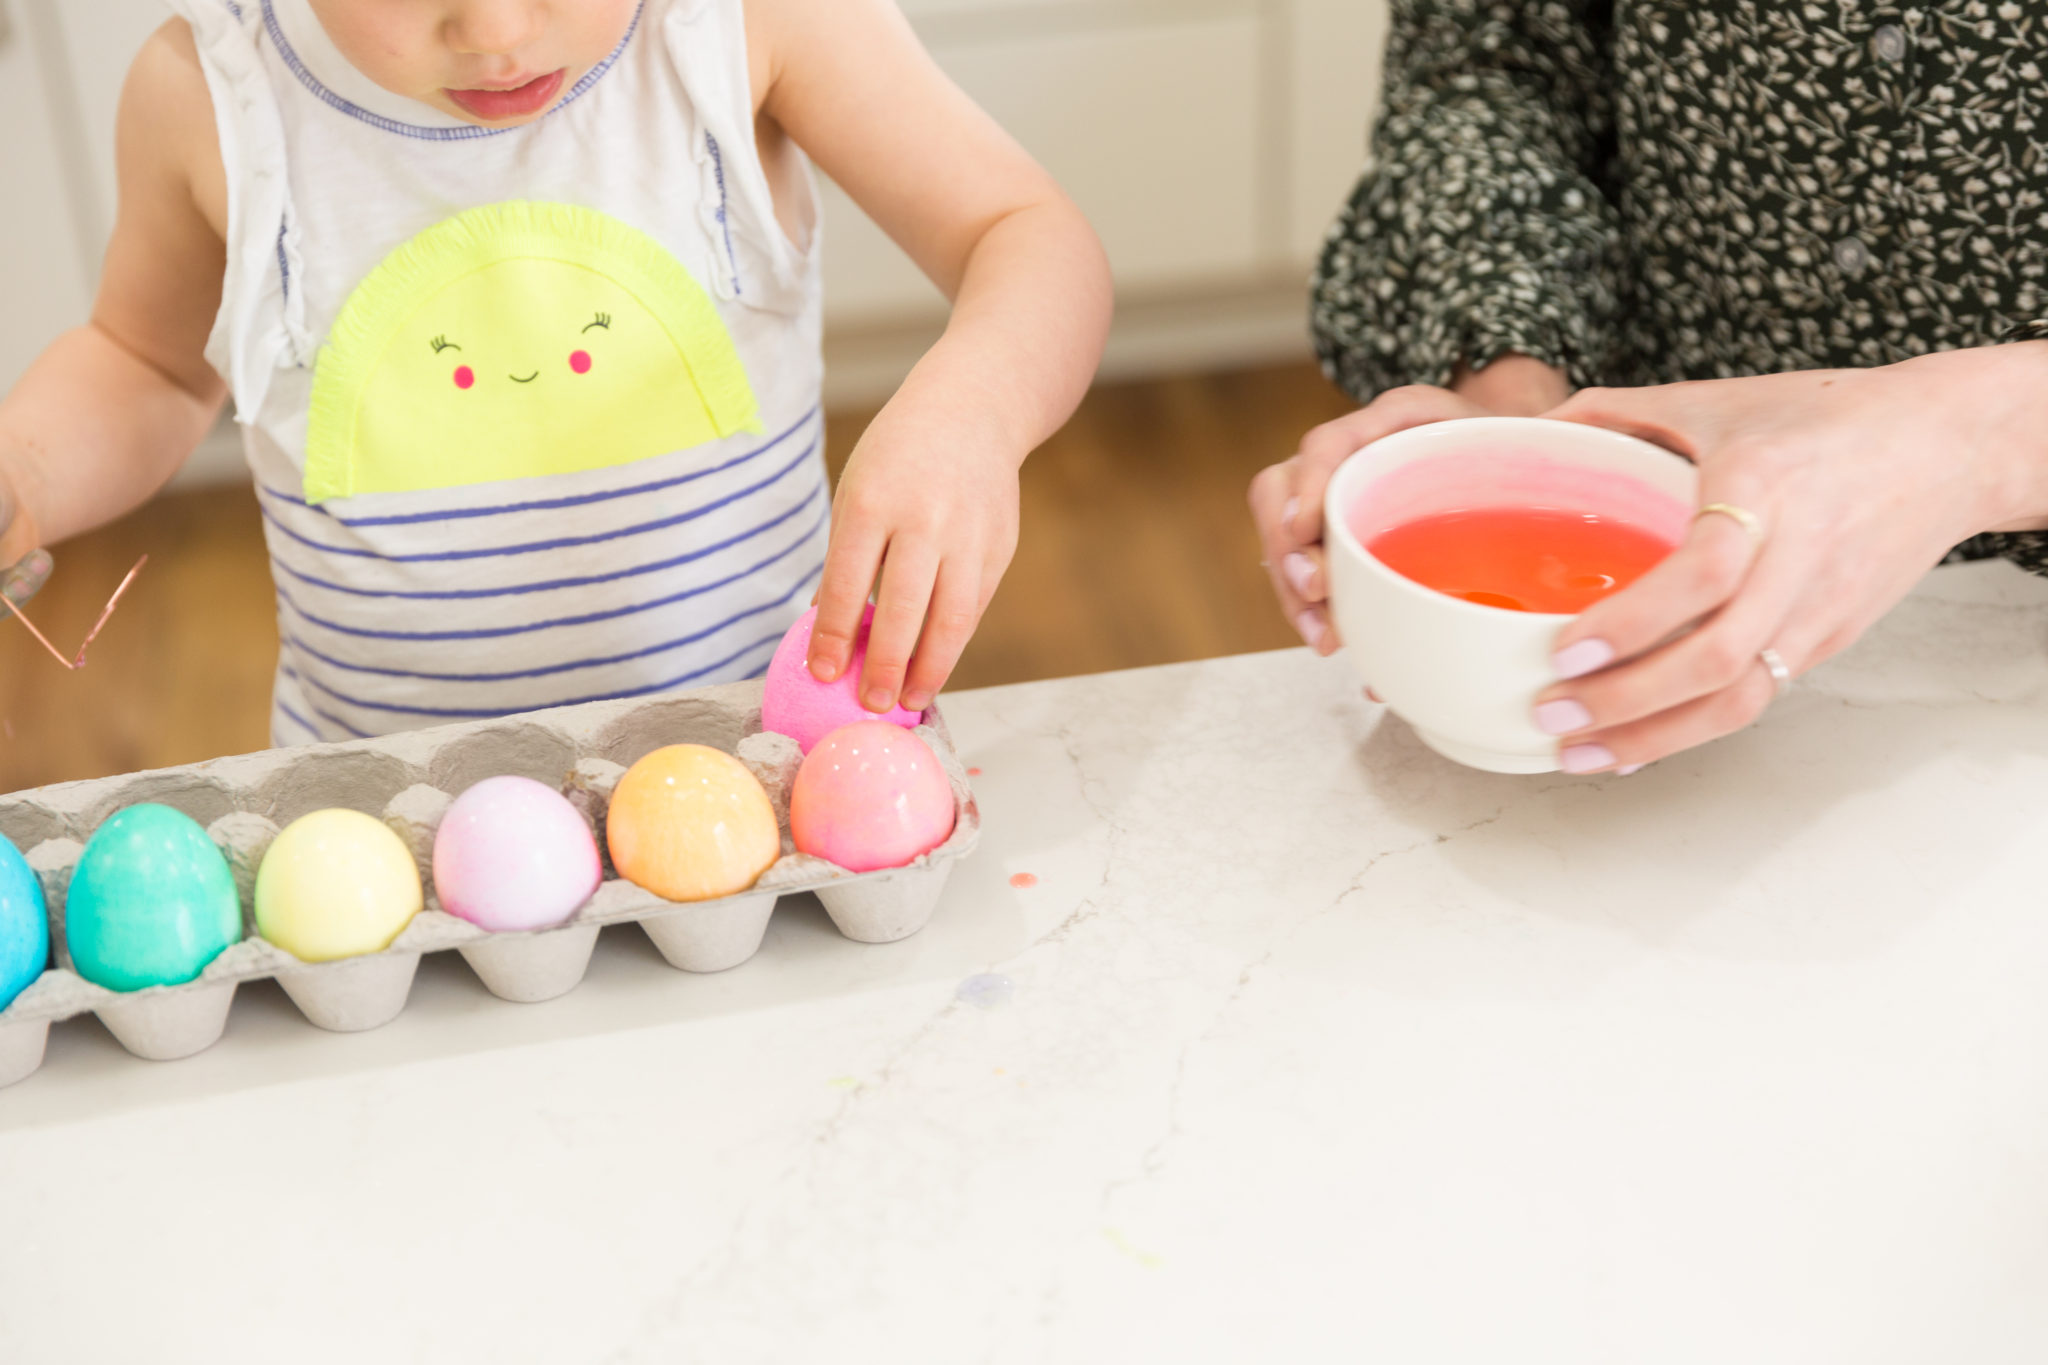 coloring easter eggs with a toddler | easter egg decorating | easter egg dying | fun easter activites for kids on allweareblog.com